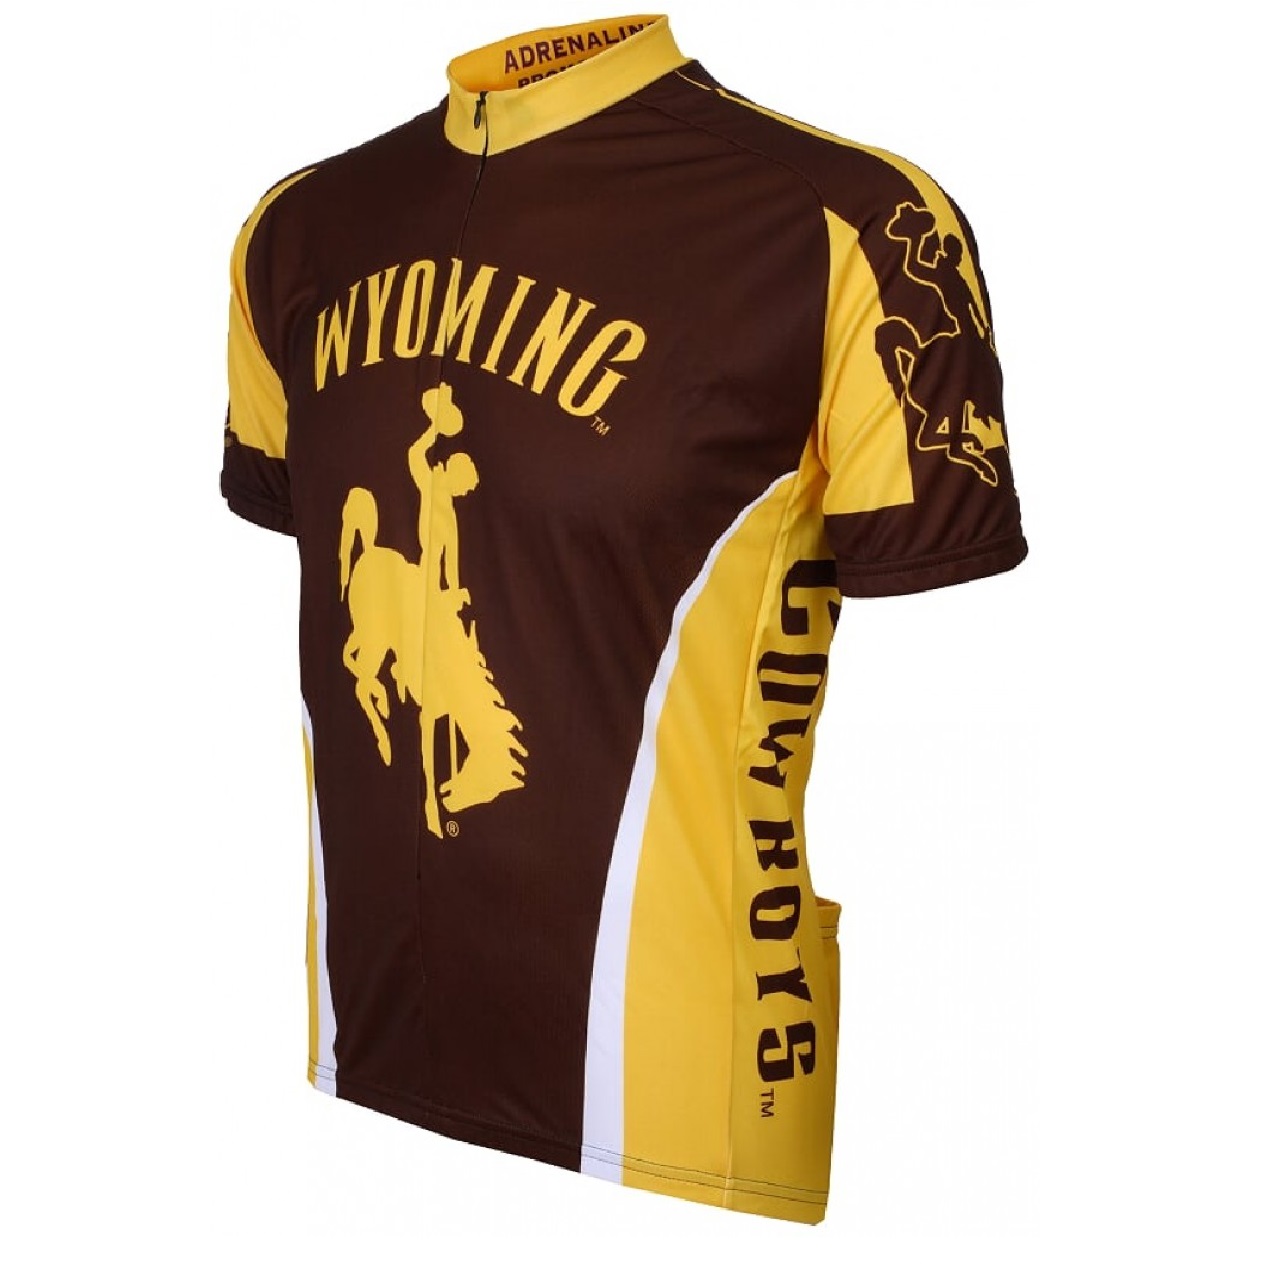 Adrenaline Promo University of Wyoming Cowboys 3/4 zip Men's Cycling Jersey